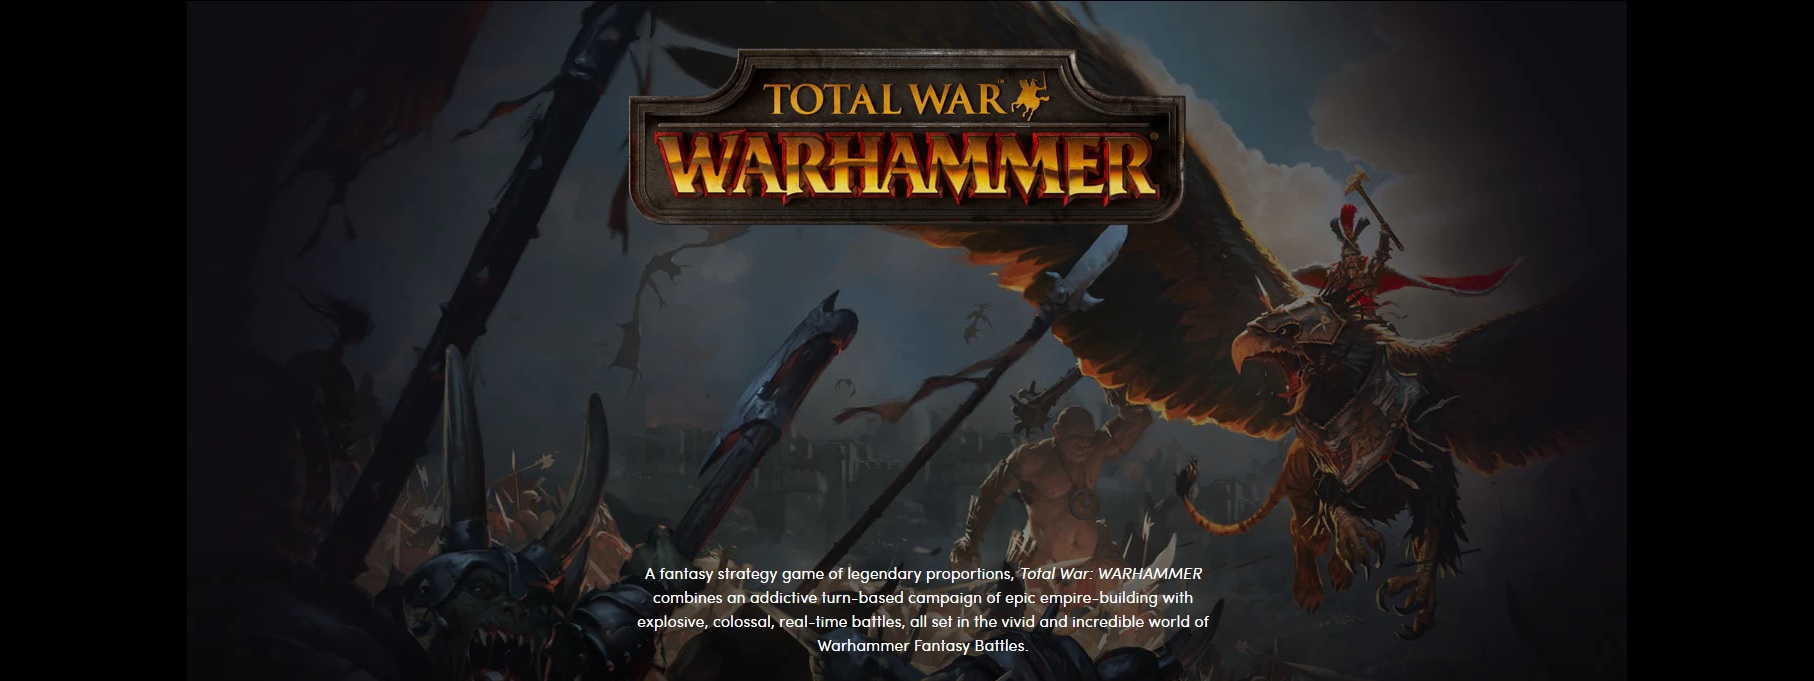 Humble Monthly 17年3月バンドル販売開始 Total War Warhammer Humble Bundle